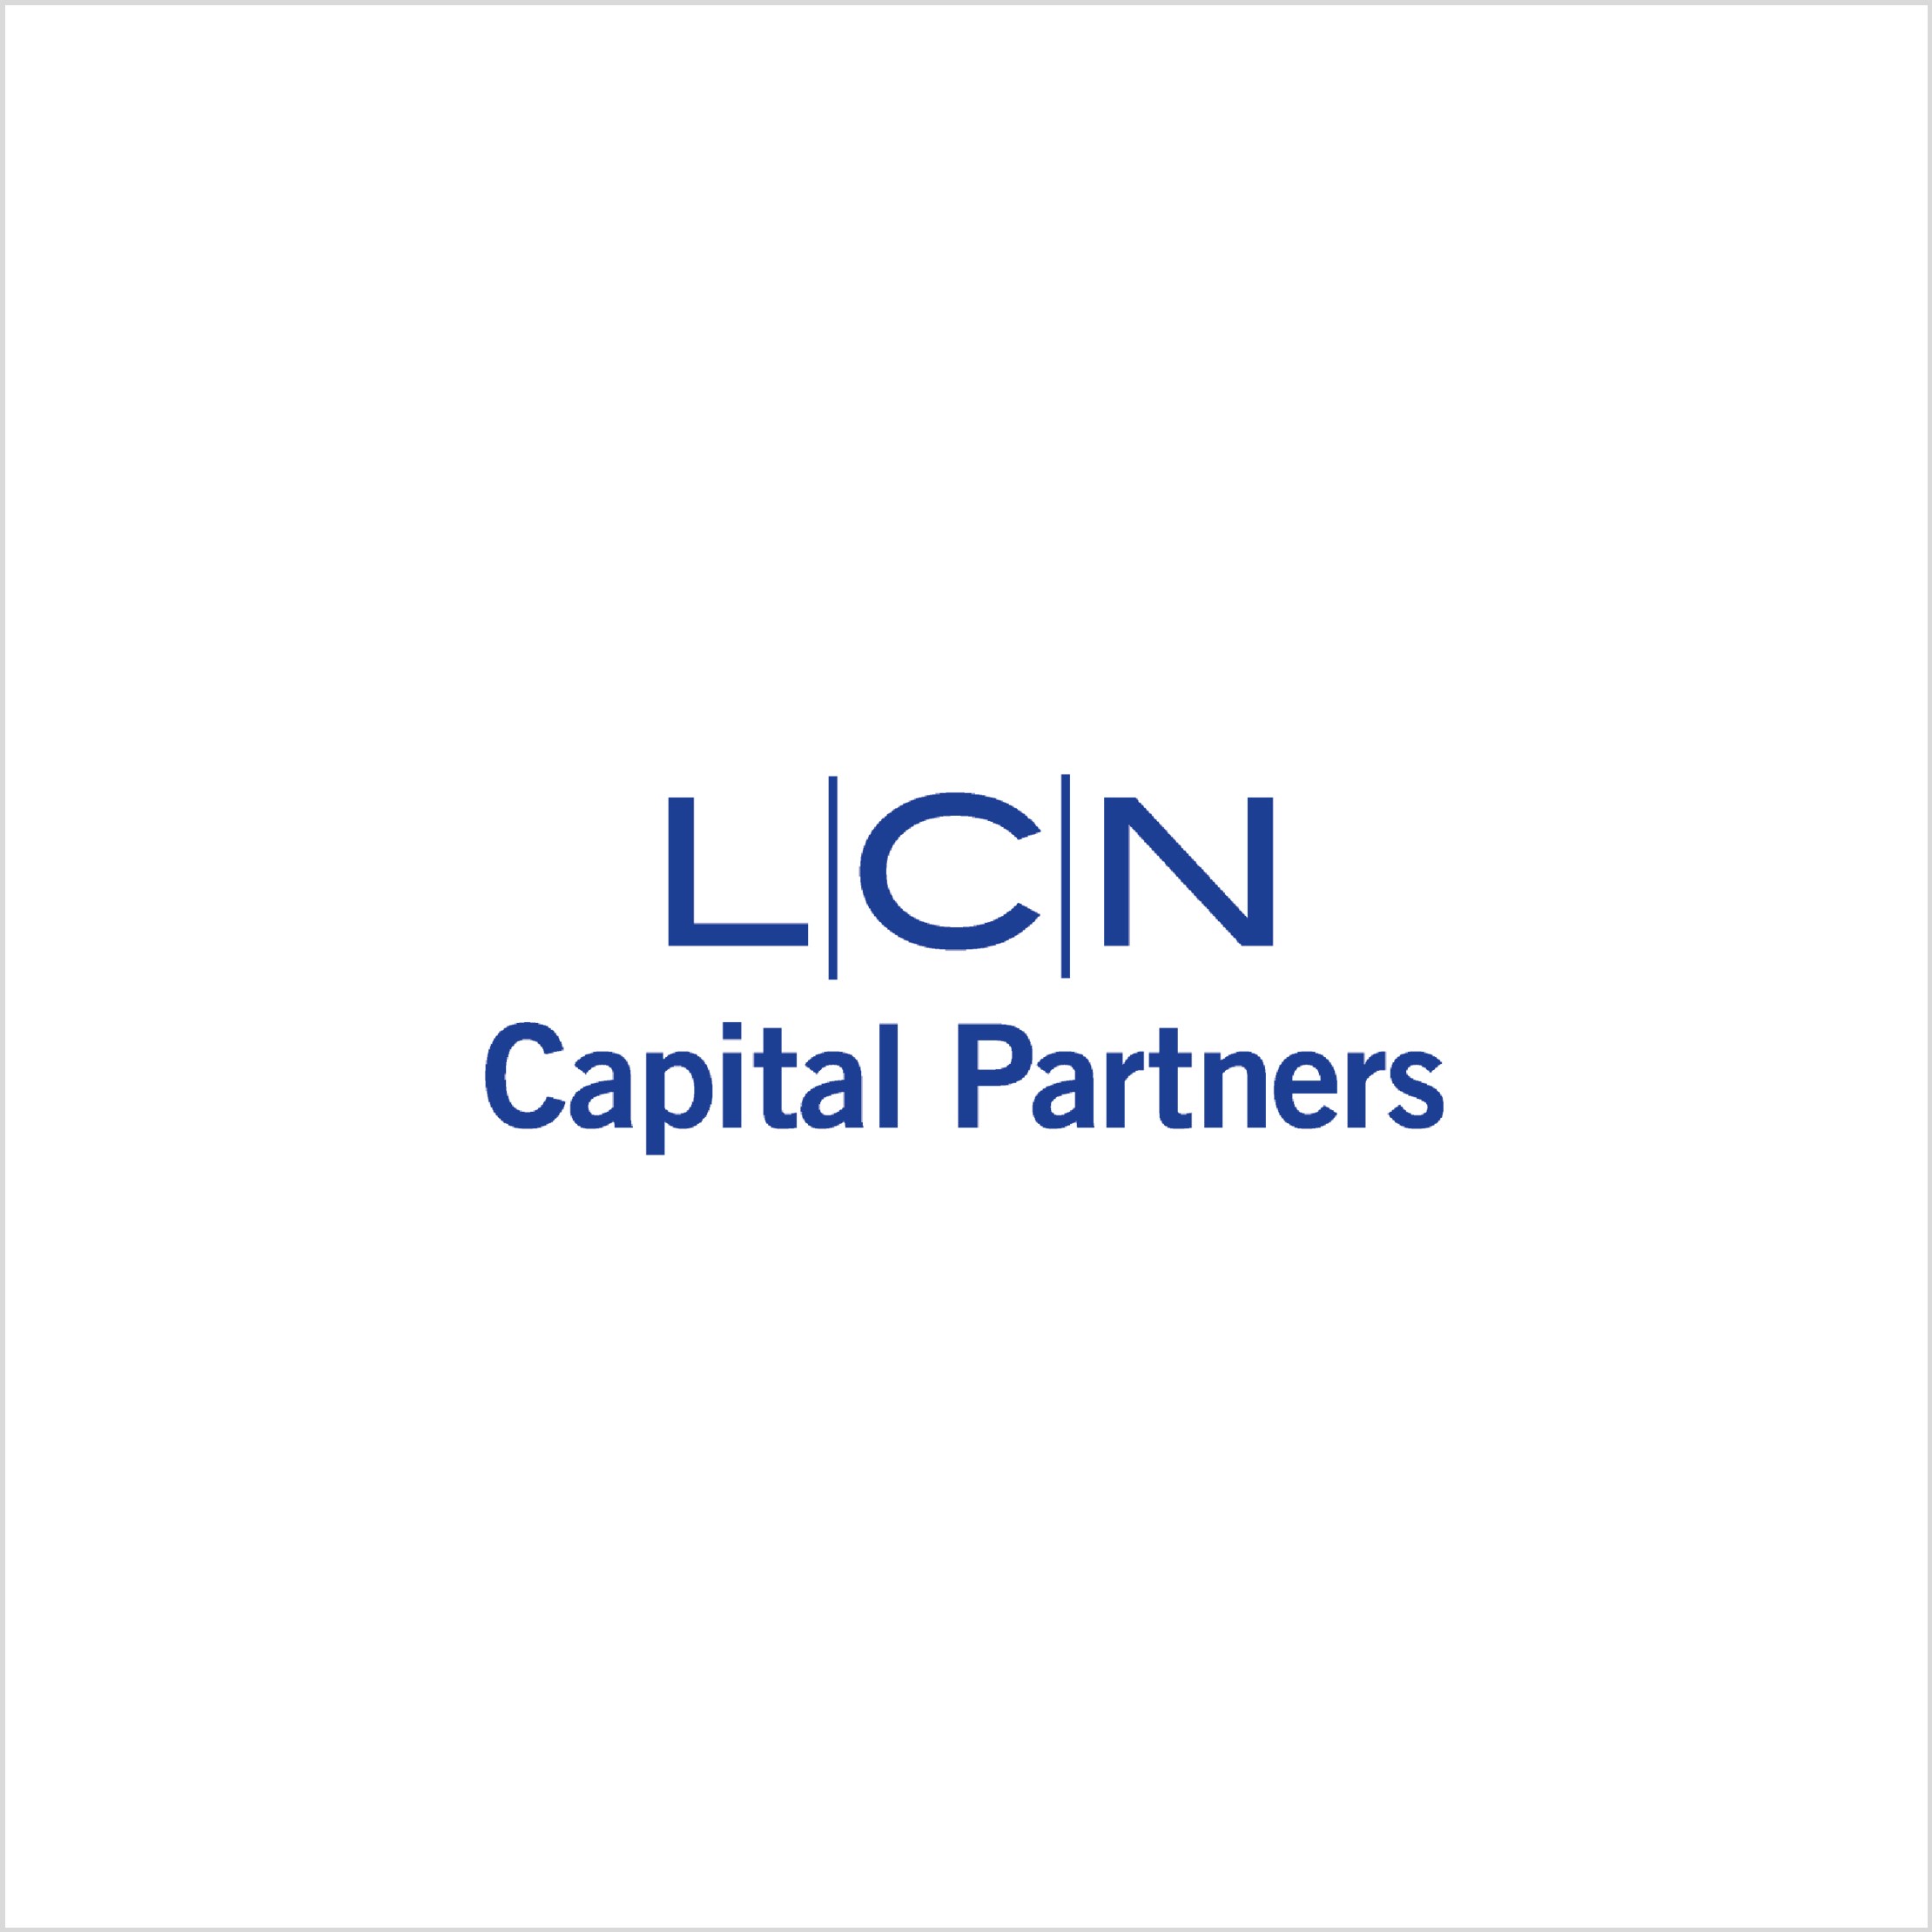 LCN Capital Partners